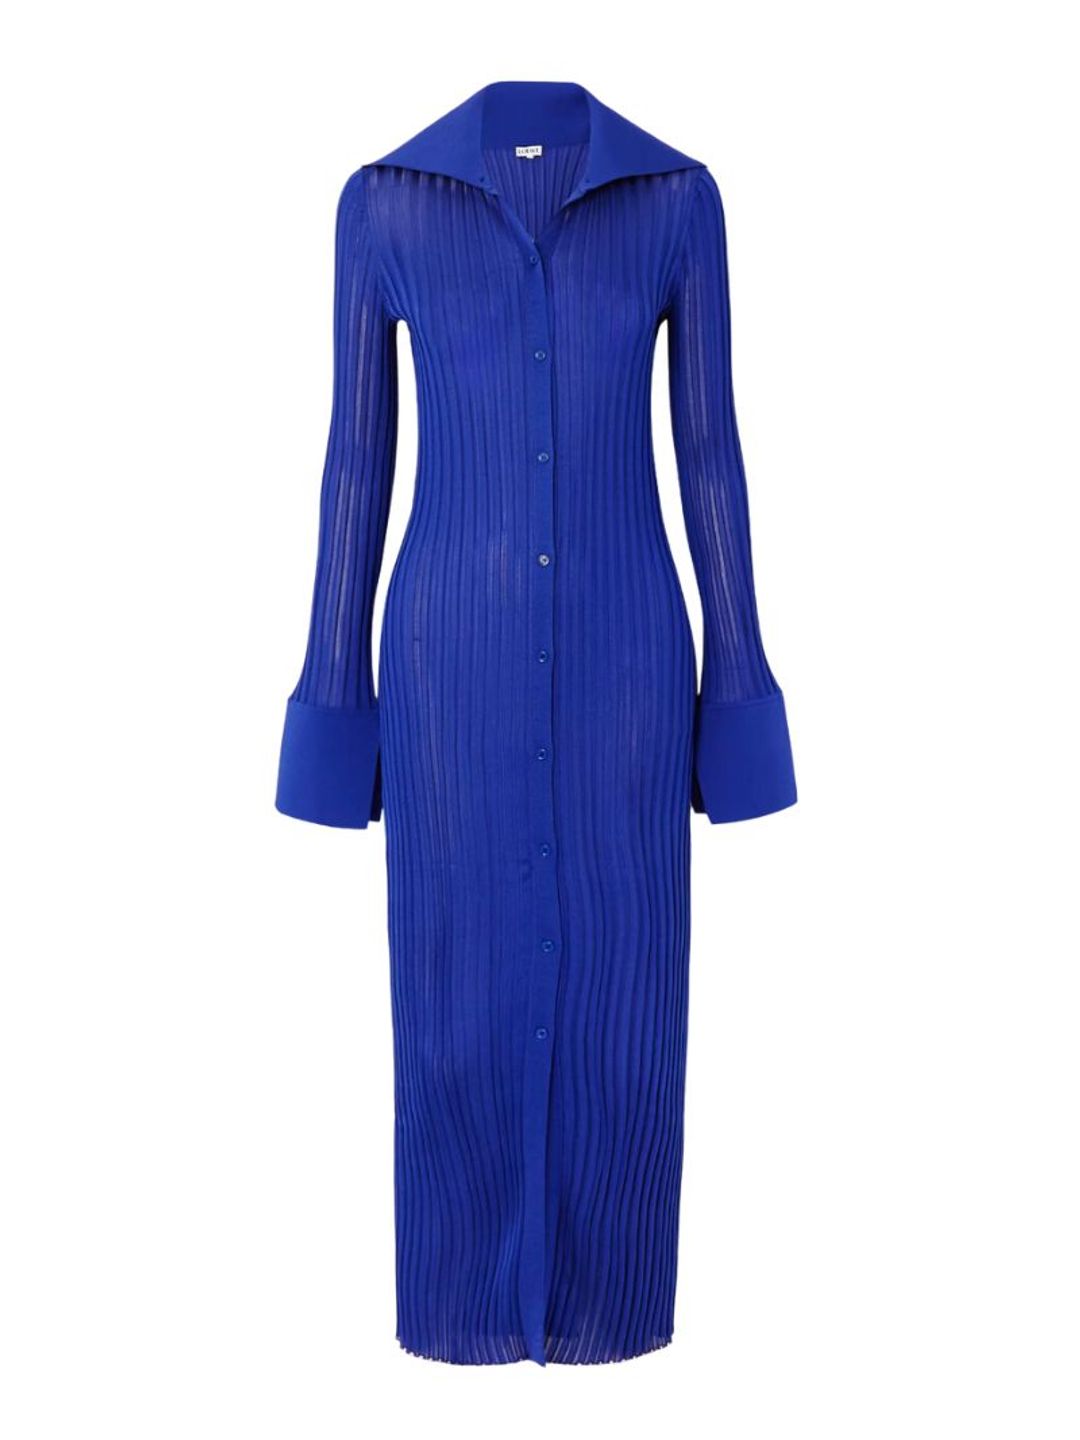 Loewe blue knit dress